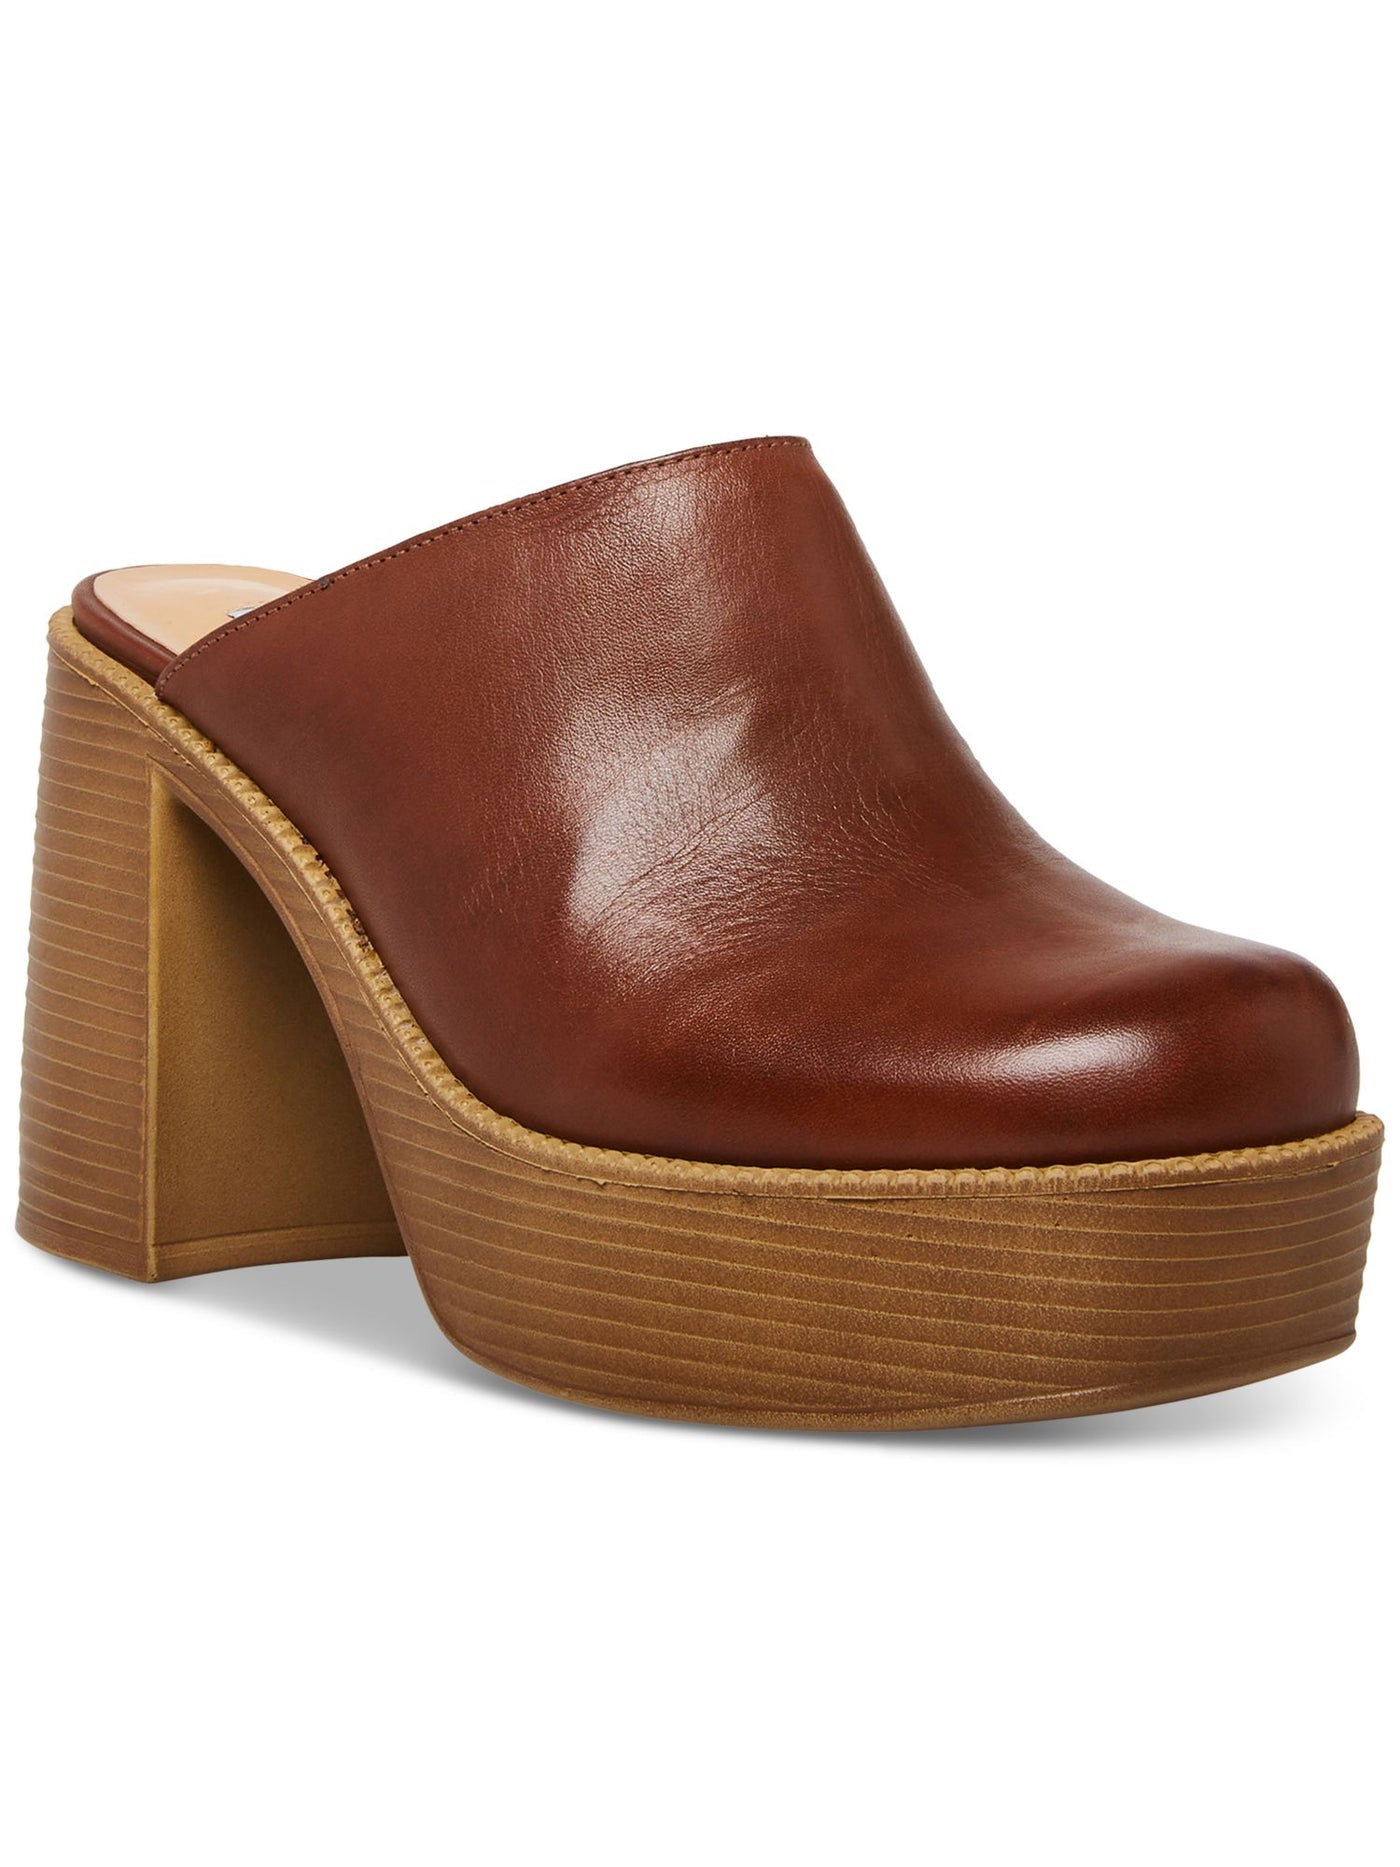 STEVE MADDEN Womens Brown 1-1/2'' Platform Clogs Padded Bowe Round Toe Block Heel Slip On Leather Heeled Sandal 8 M